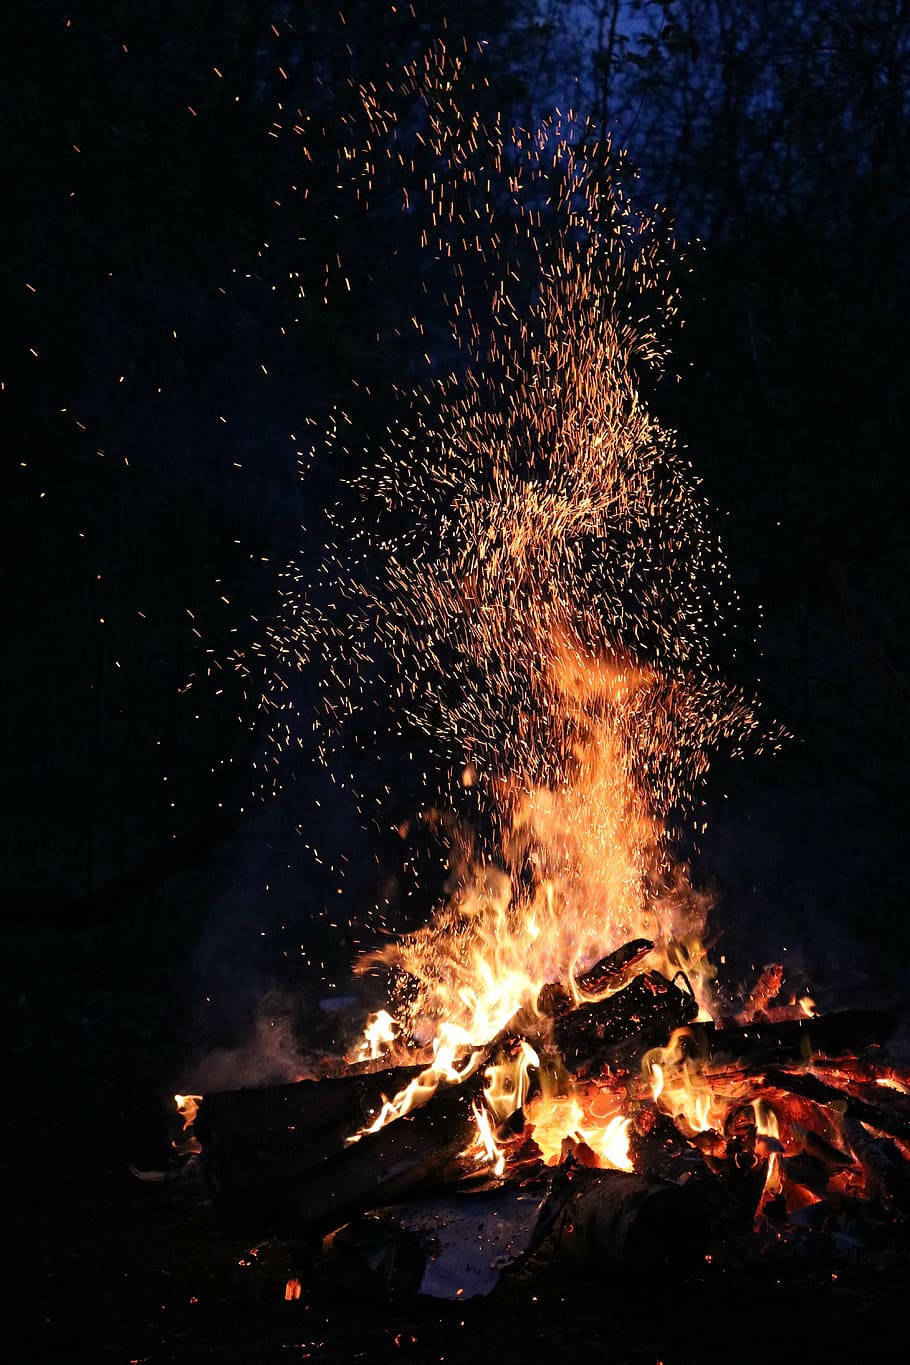 bonfire during nighttime, forest, koster, flame, spark, fever